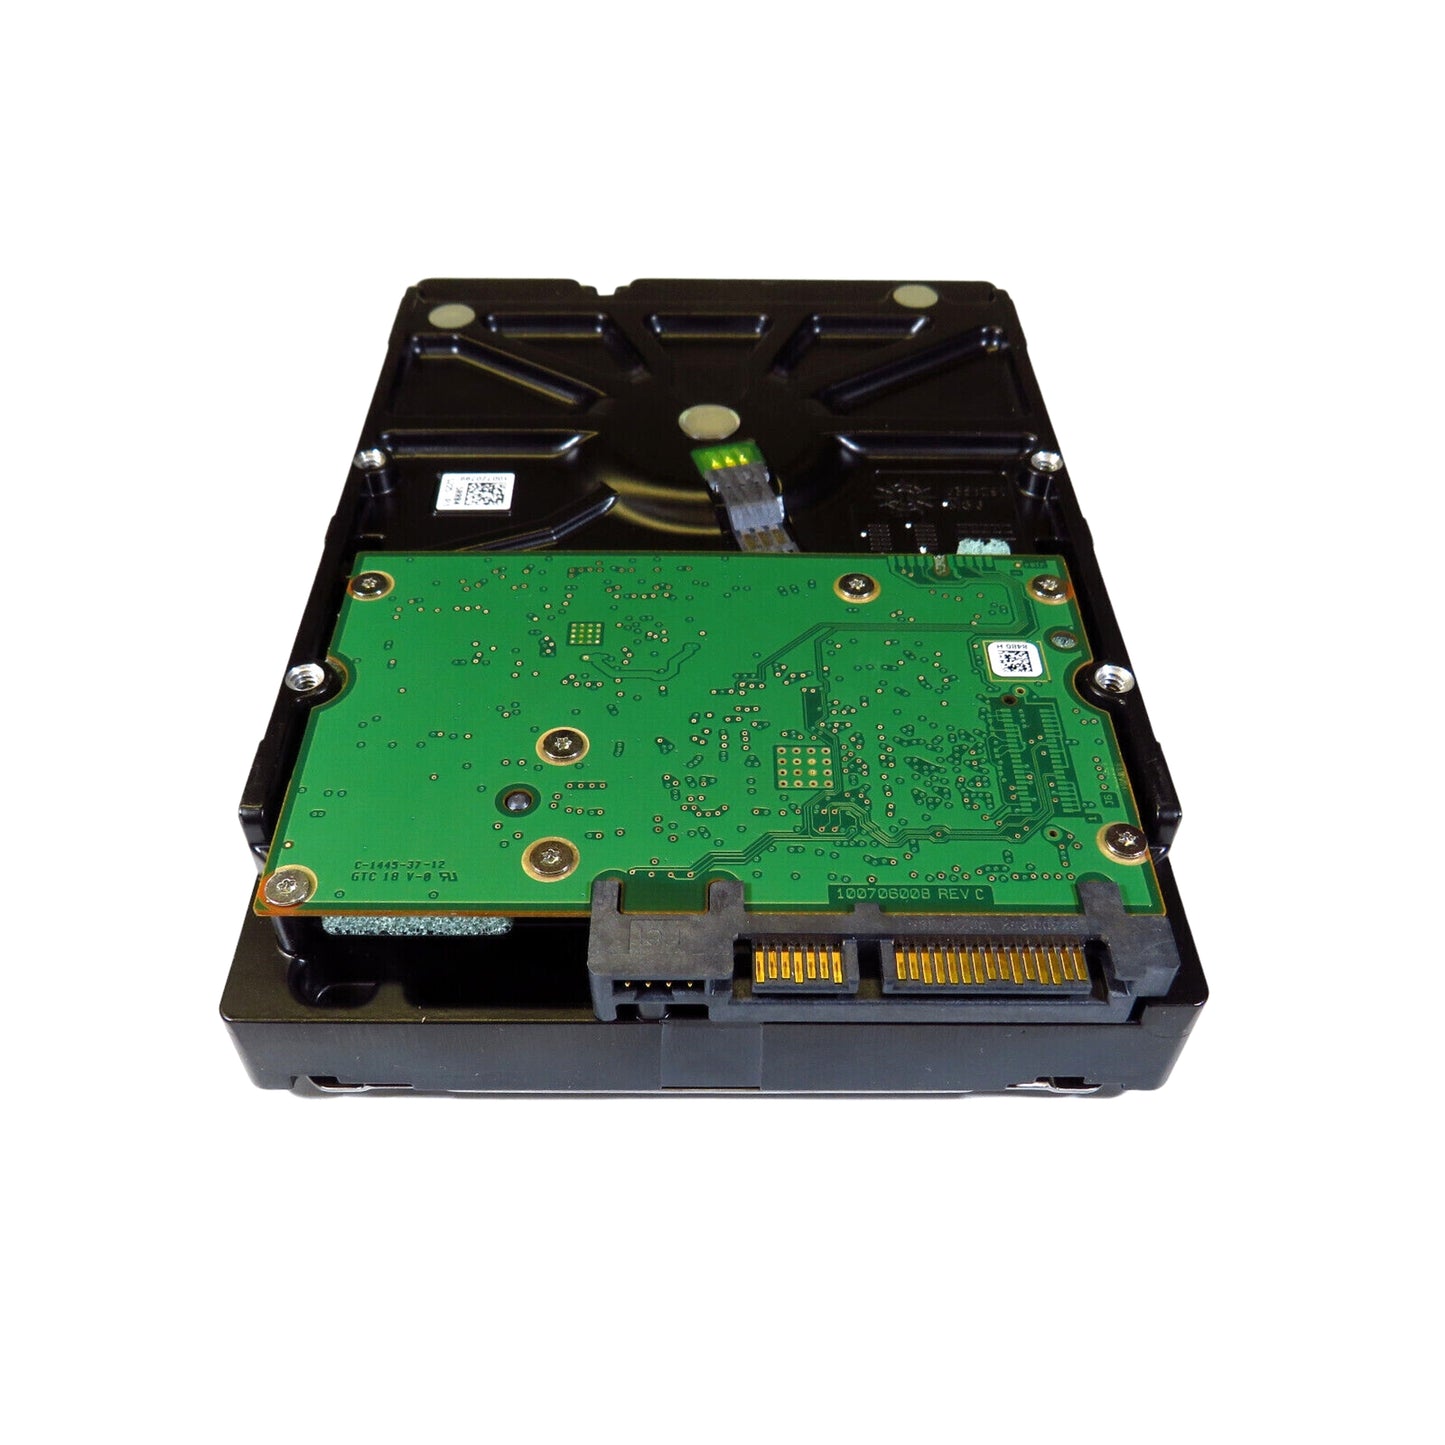 Seagate ST4000NM0033 3.5" 4TB 7200RPM SATA III Hard Disk Drive (HDD), Silver (Refurbished)